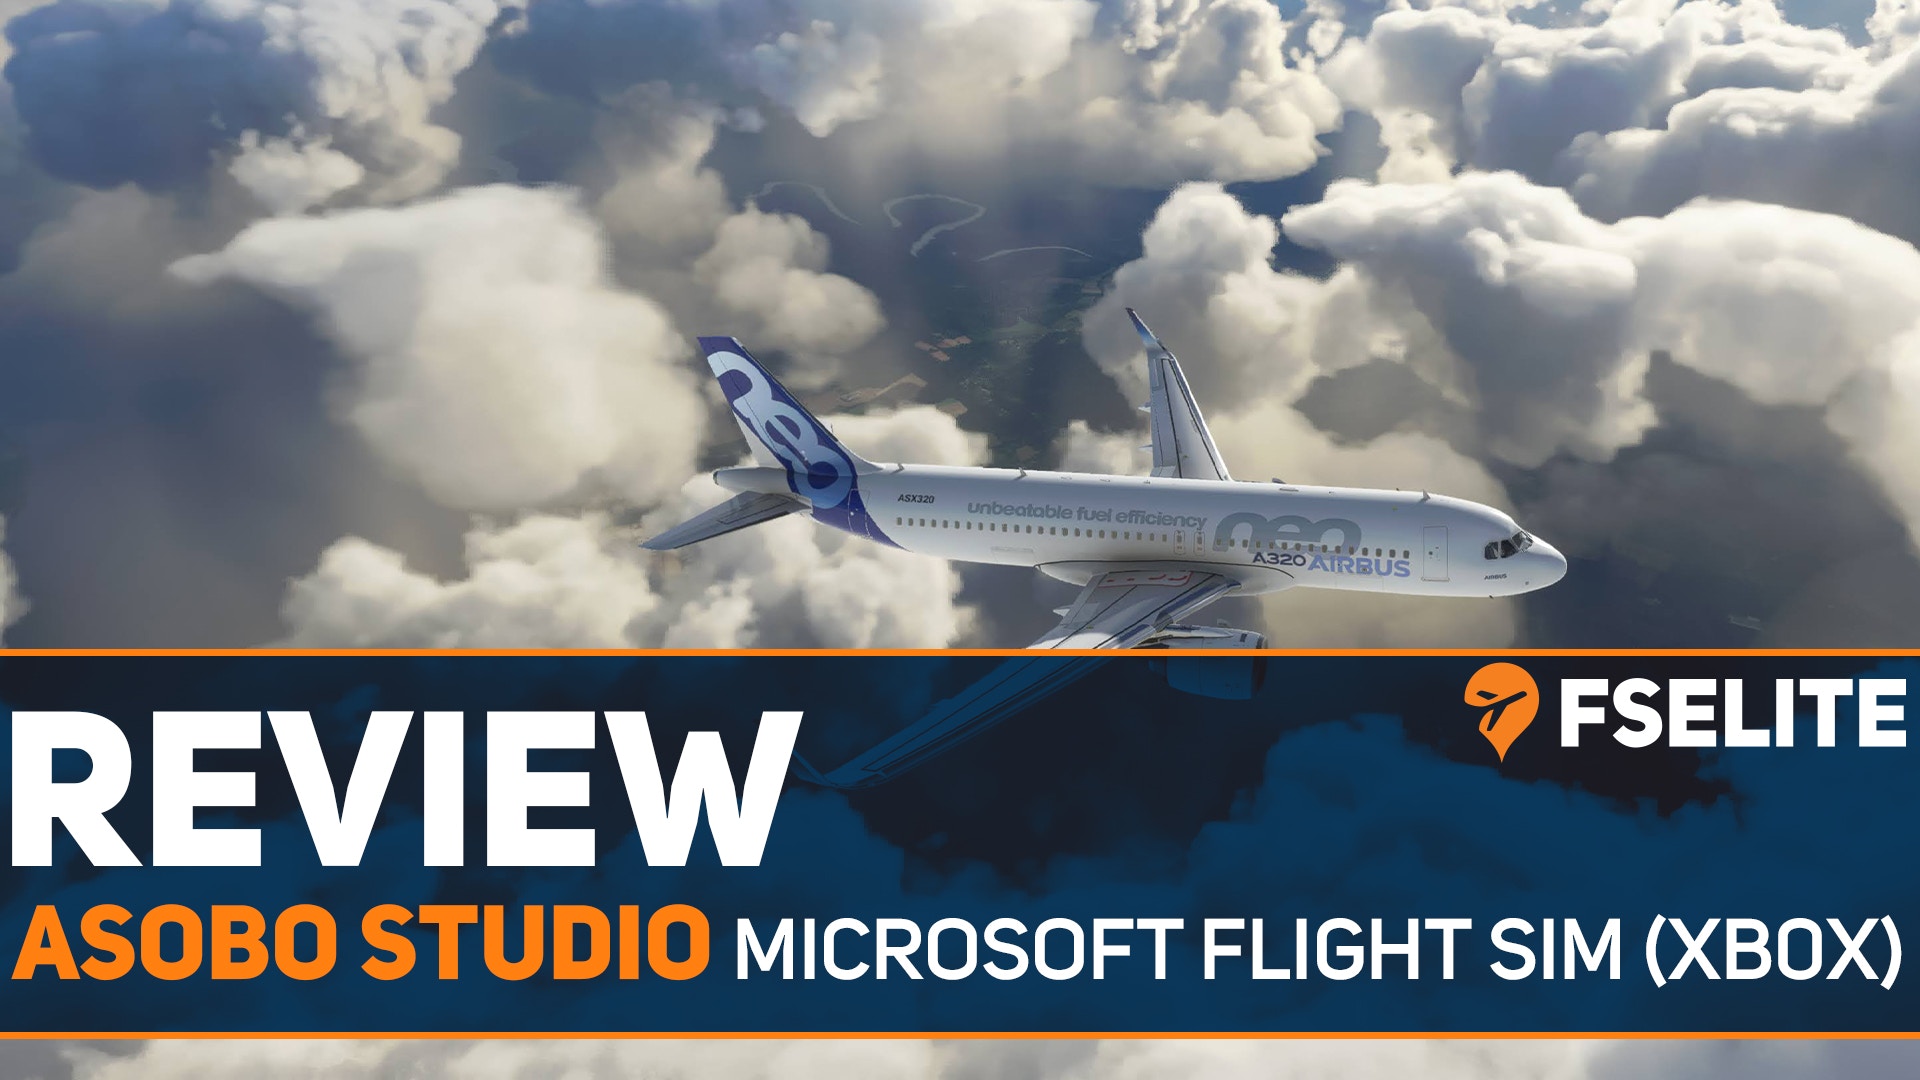 Microsoft Flight Simulator X - Mission = Finding your way - Gameplay  Walkthrough 